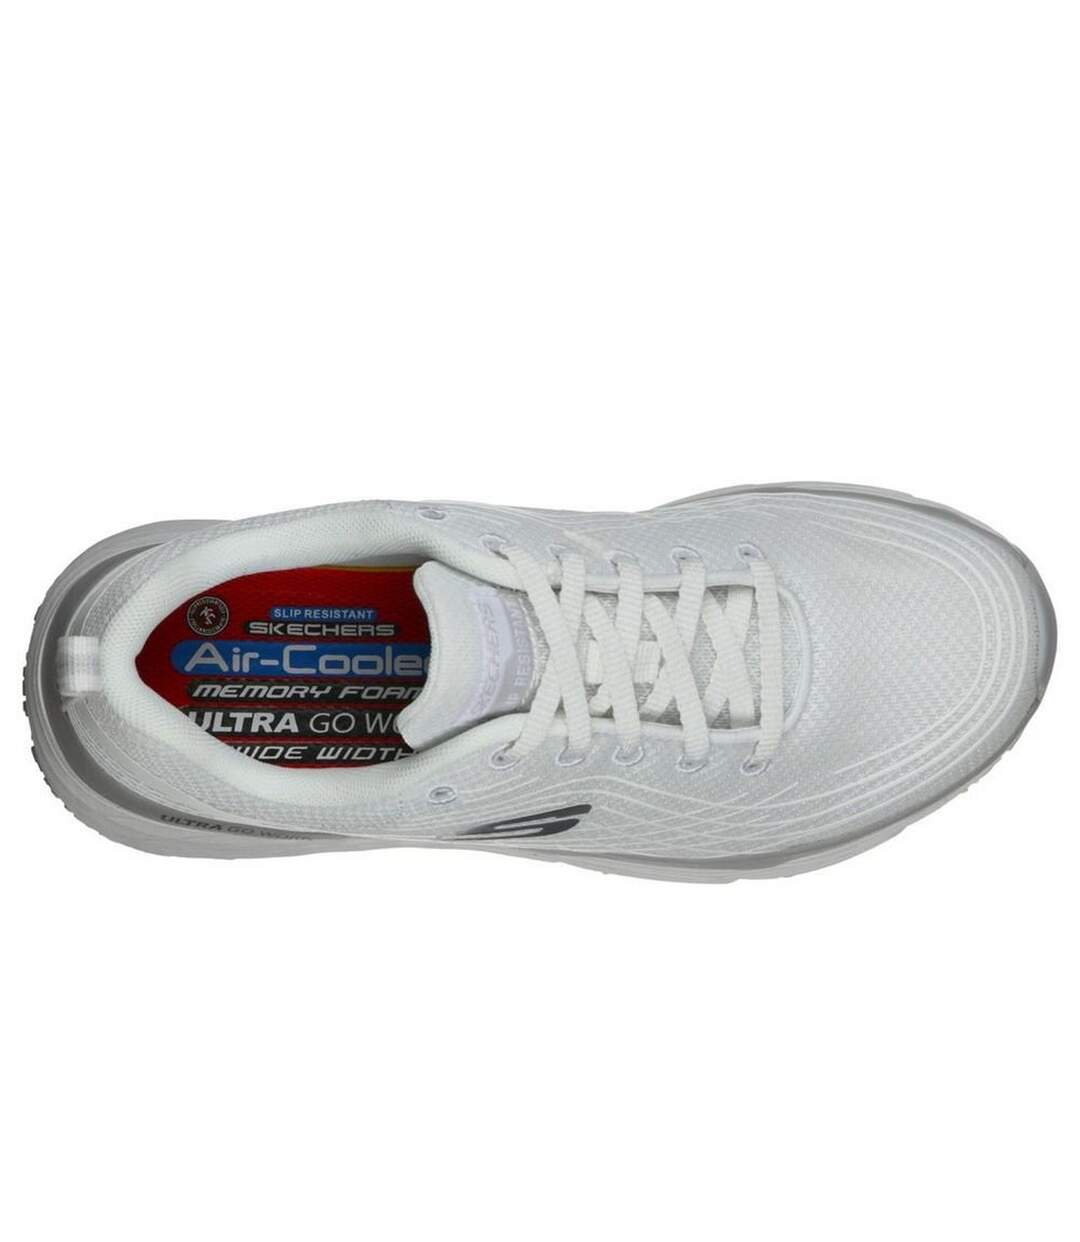 Skechers Womens/Ladies Max Cushioning Elite Sr Safety Shoes (White) - UTFS7948